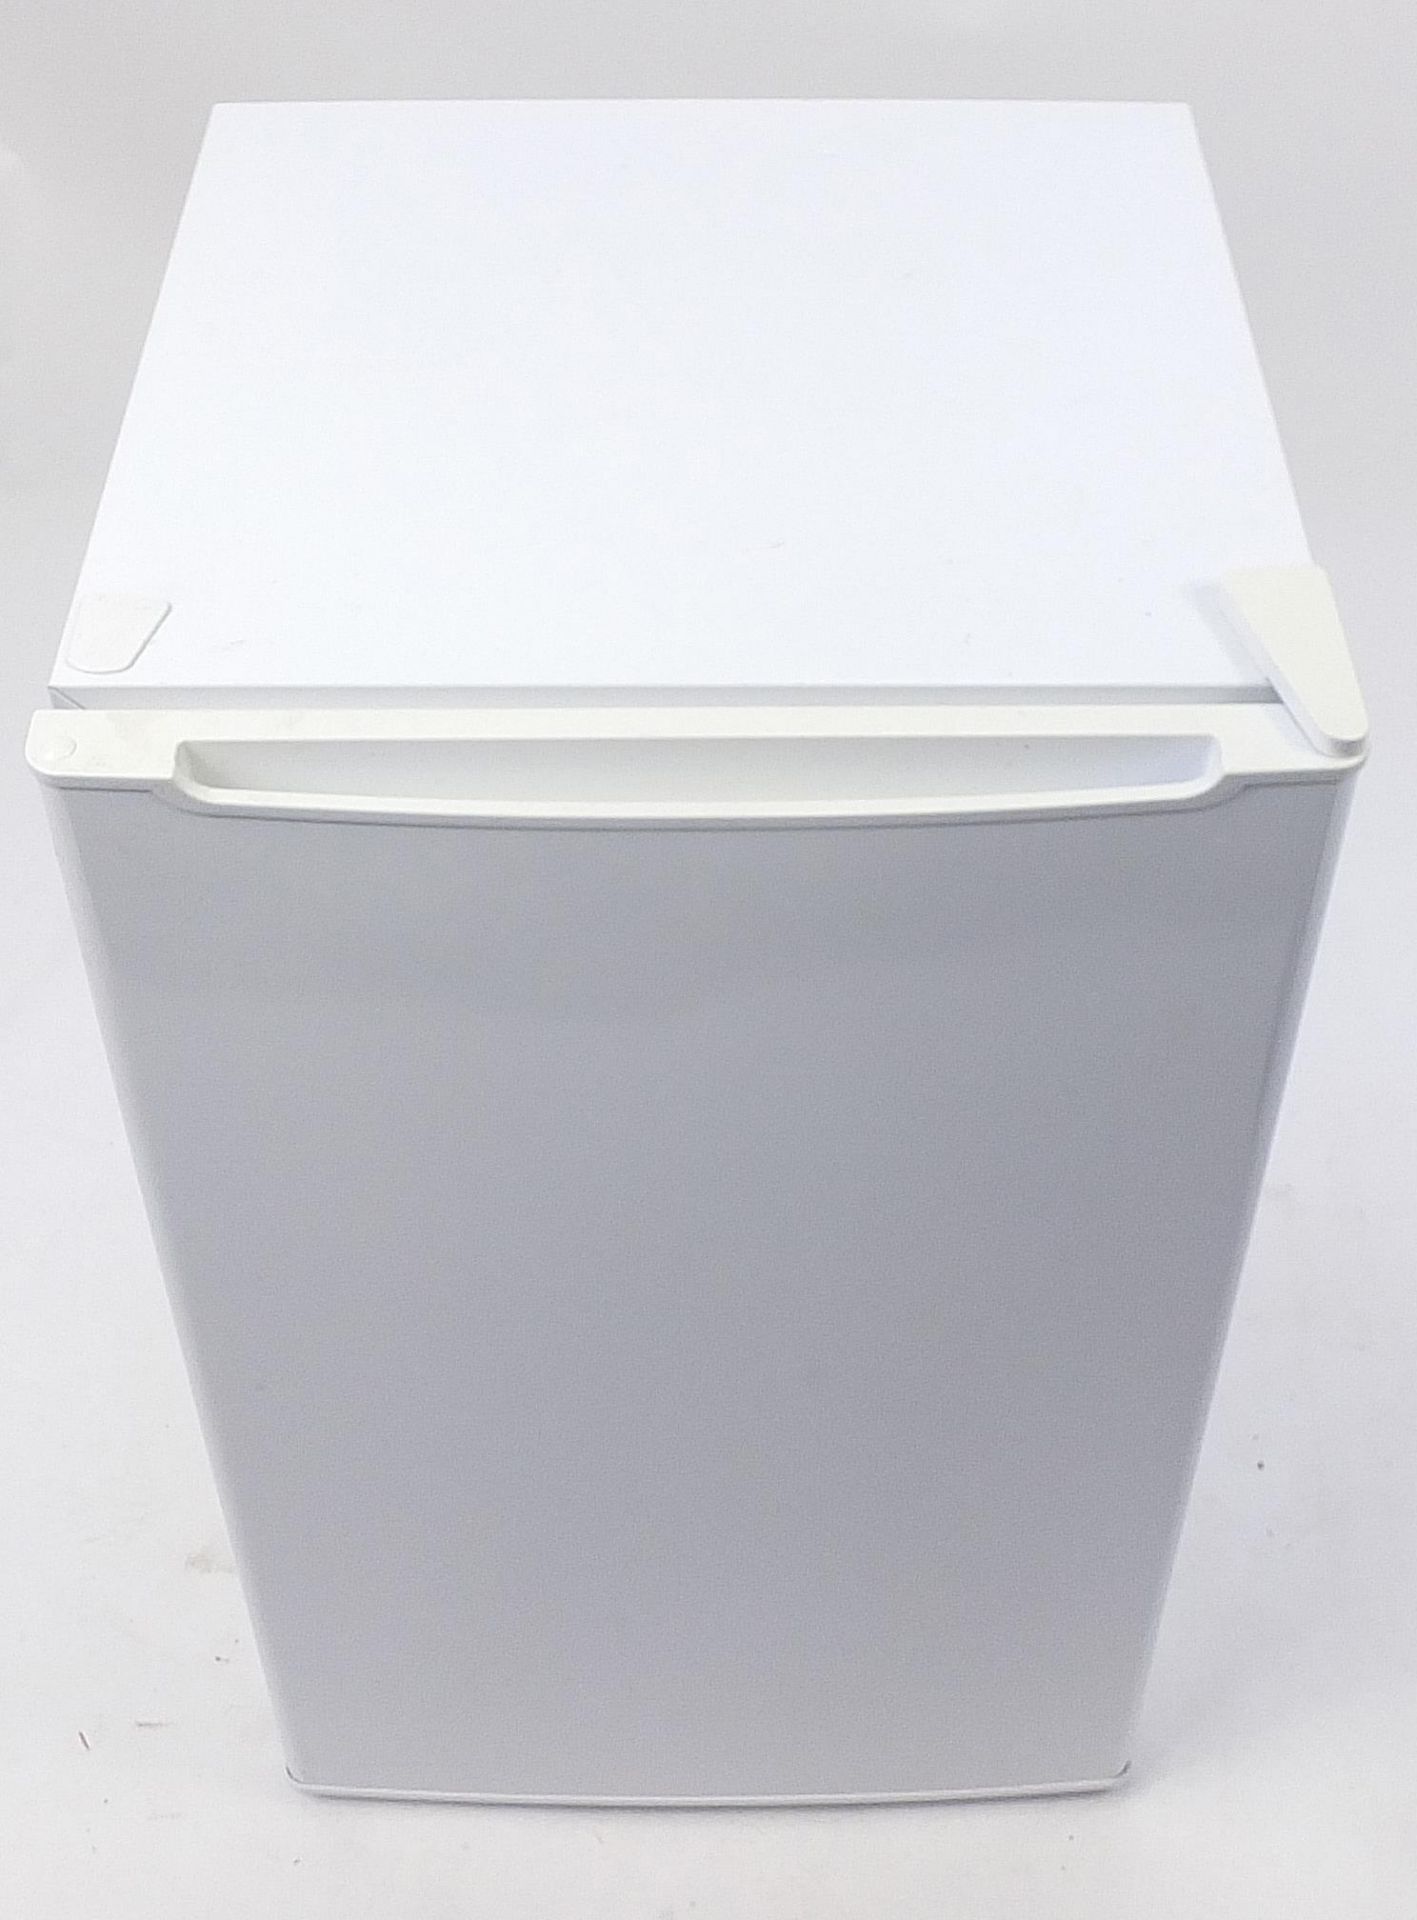 Undercounter freezer, 84cm H x 50cm W x 50cm D - Image 2 of 4